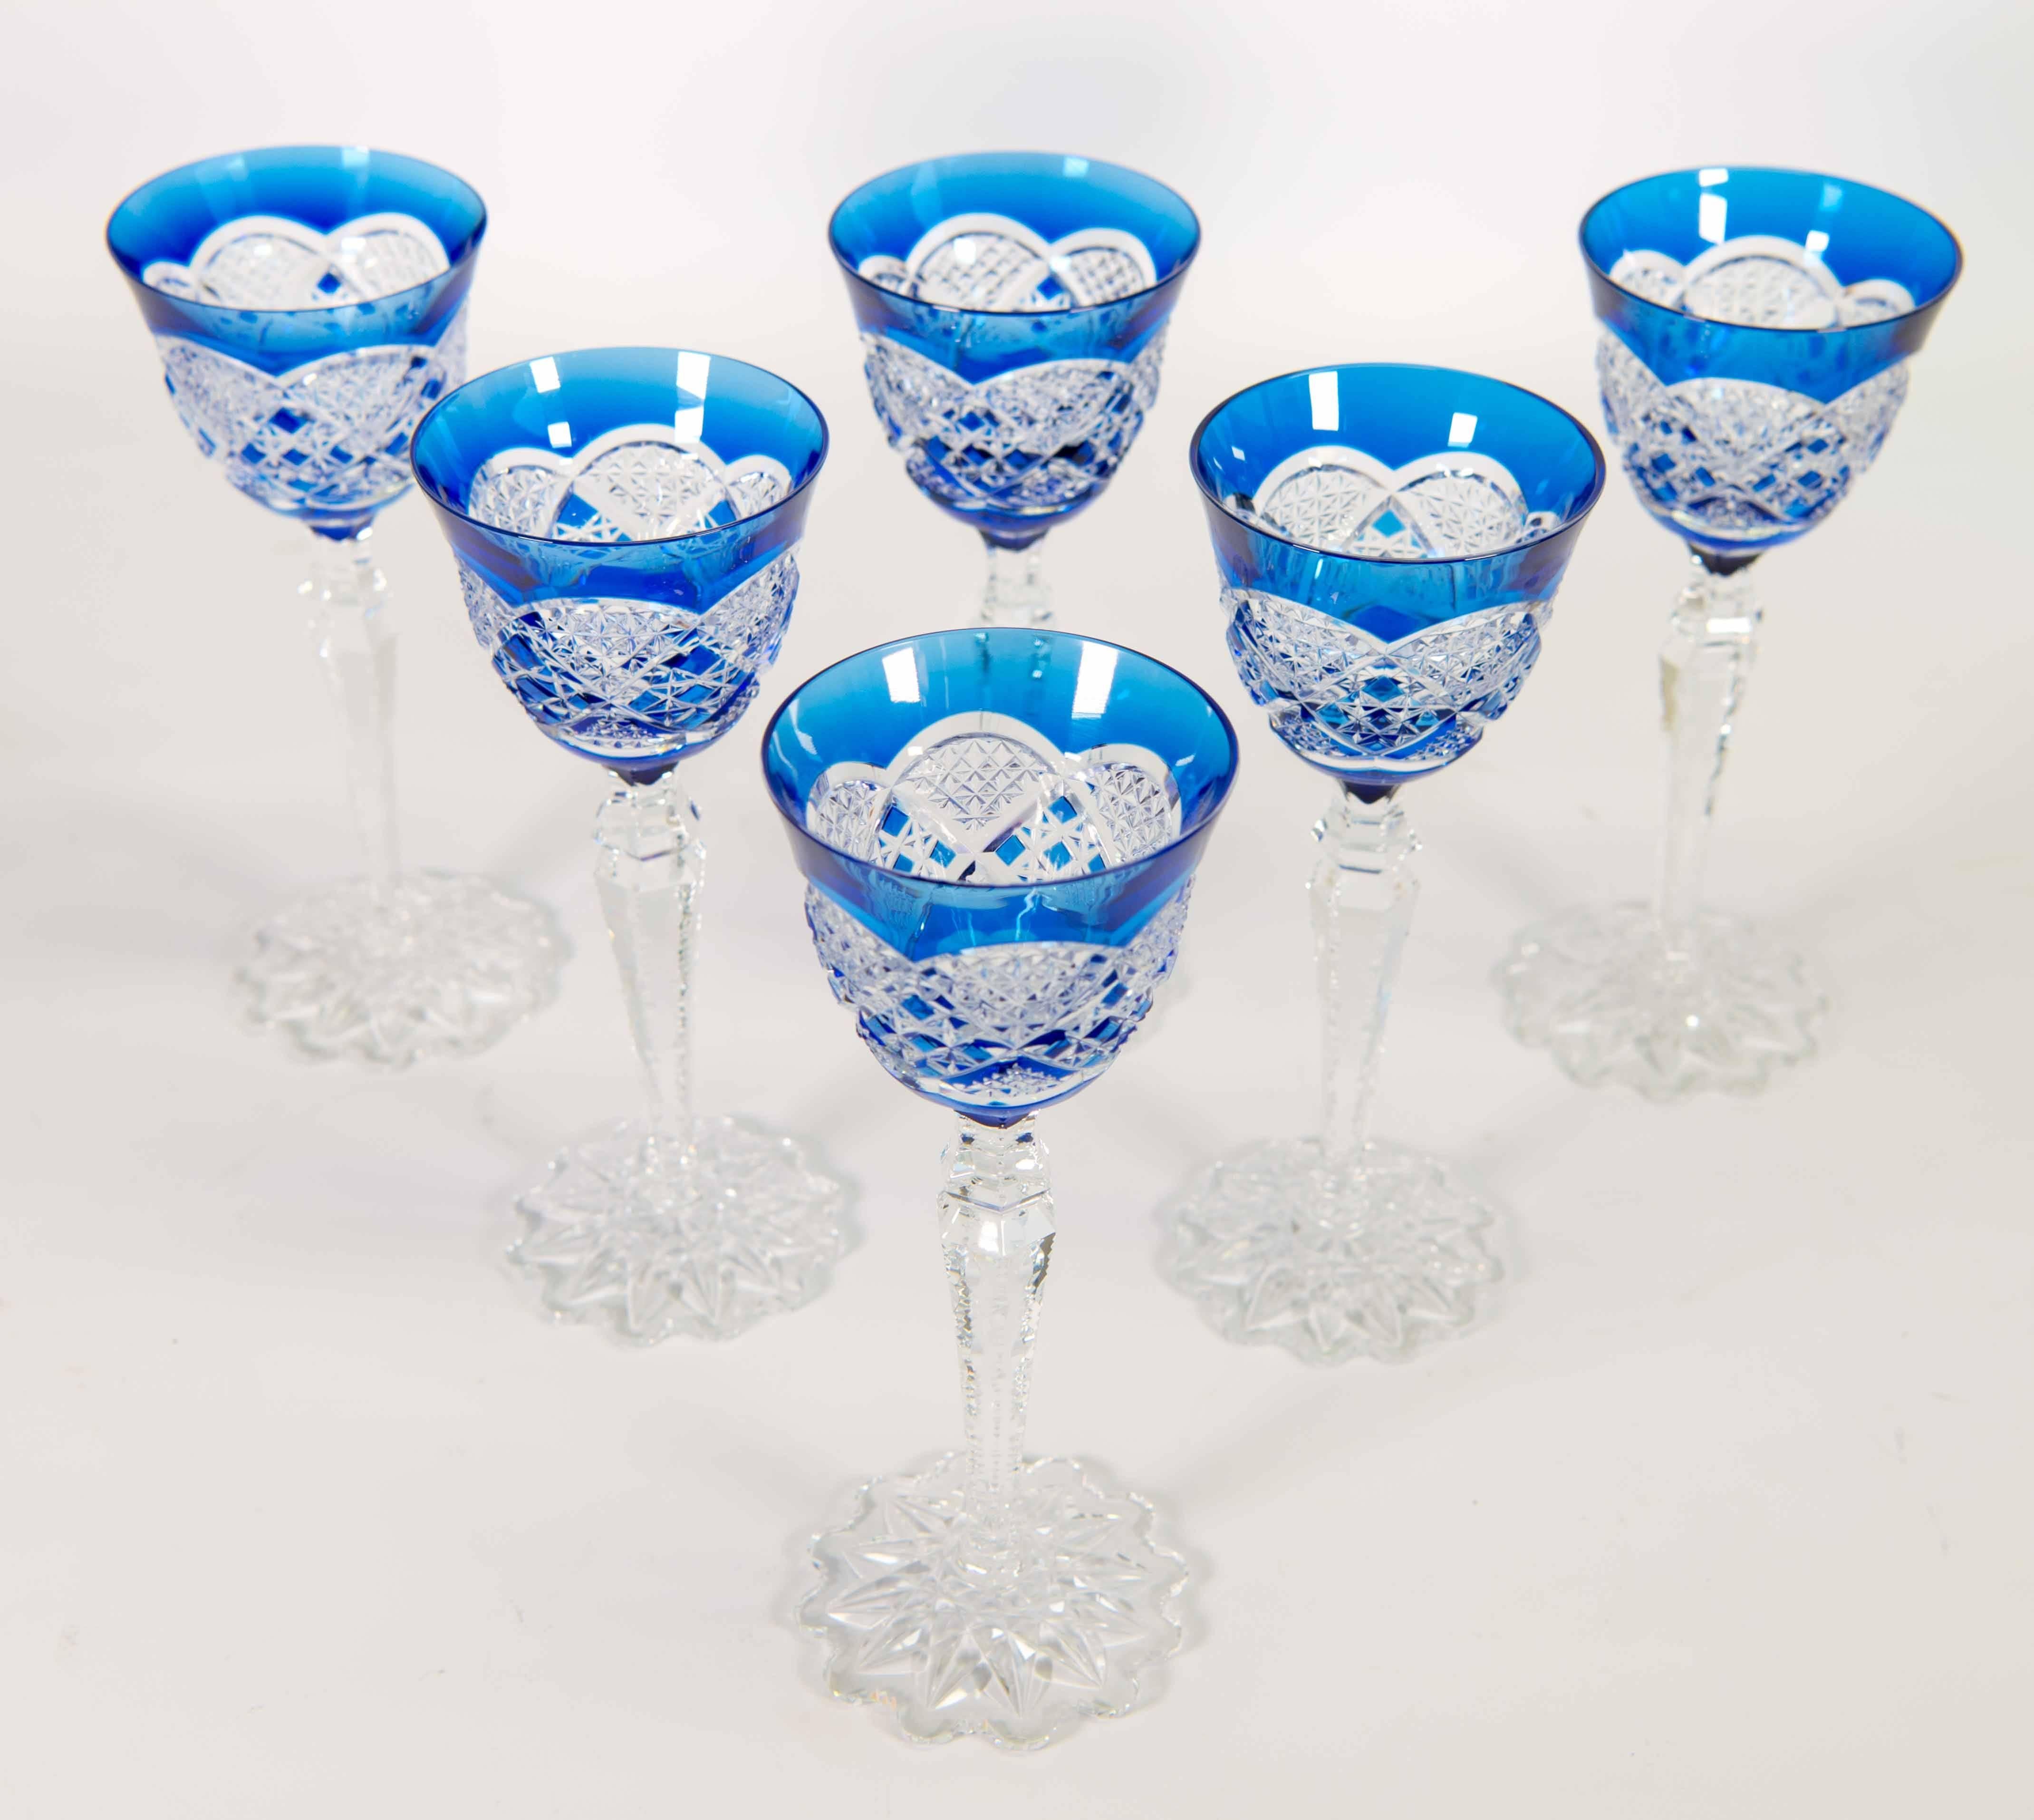 Mid-20th Century Set of Six Cobalt Blue Val Saint Lambert Glasses in Crystal Made in Belgium